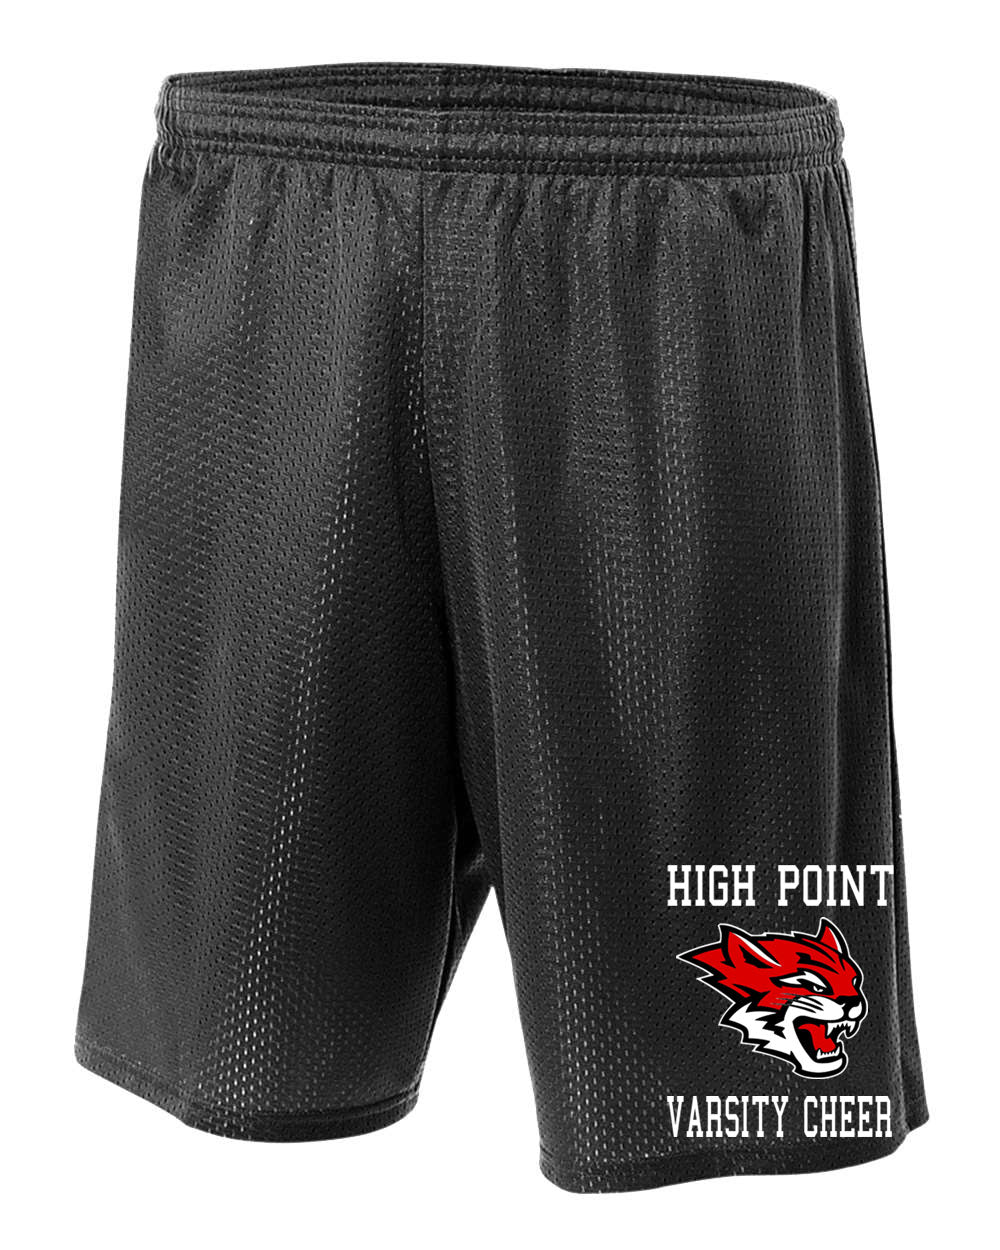 Wildcats Cheer Design 3 Mesh Shorts